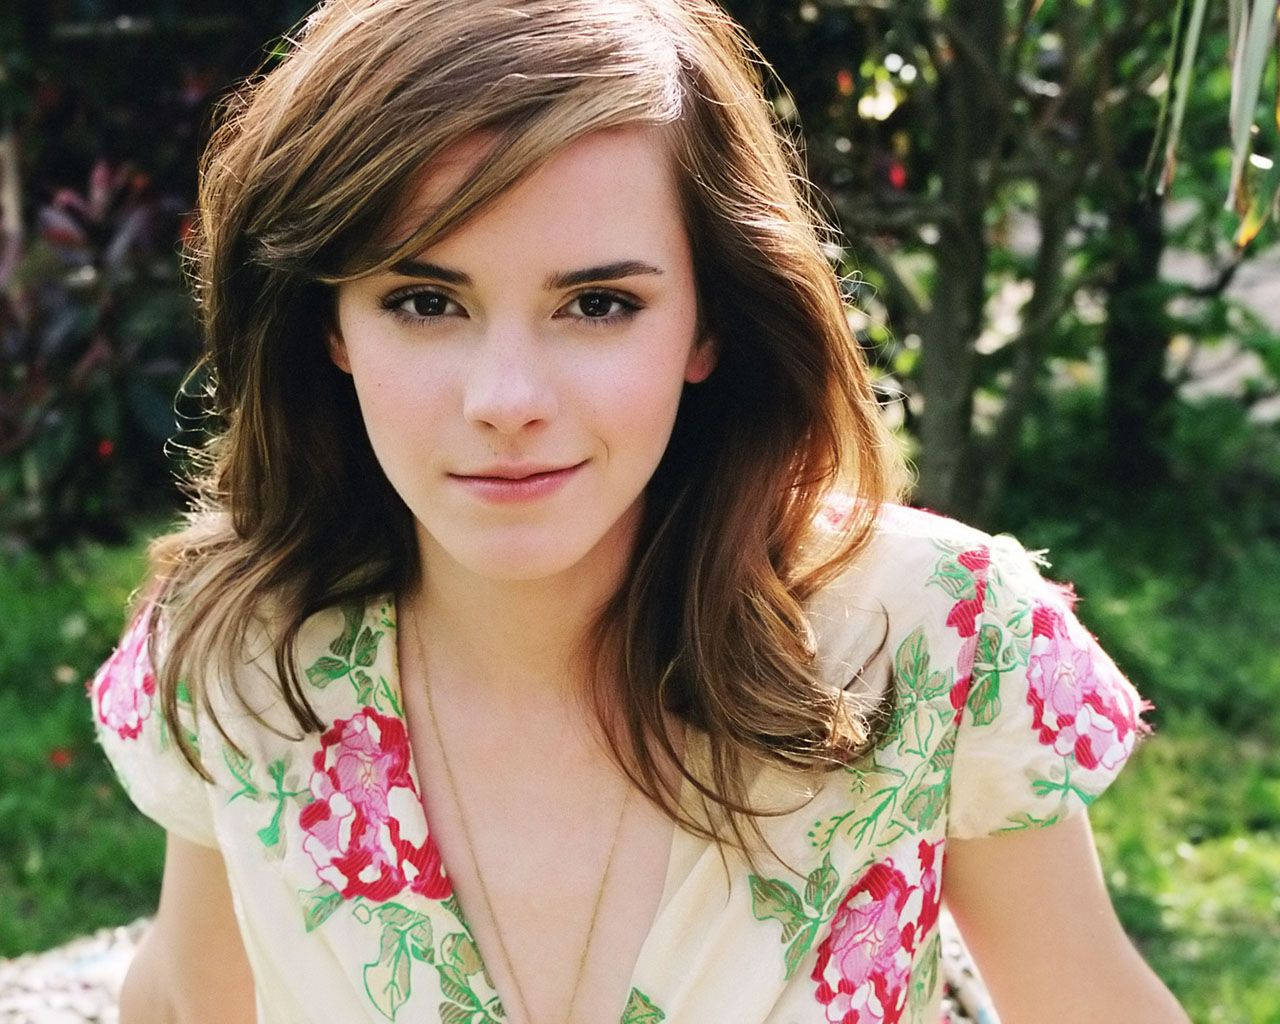 Emma Watson 1280X1024 Wallpaper and Background Image